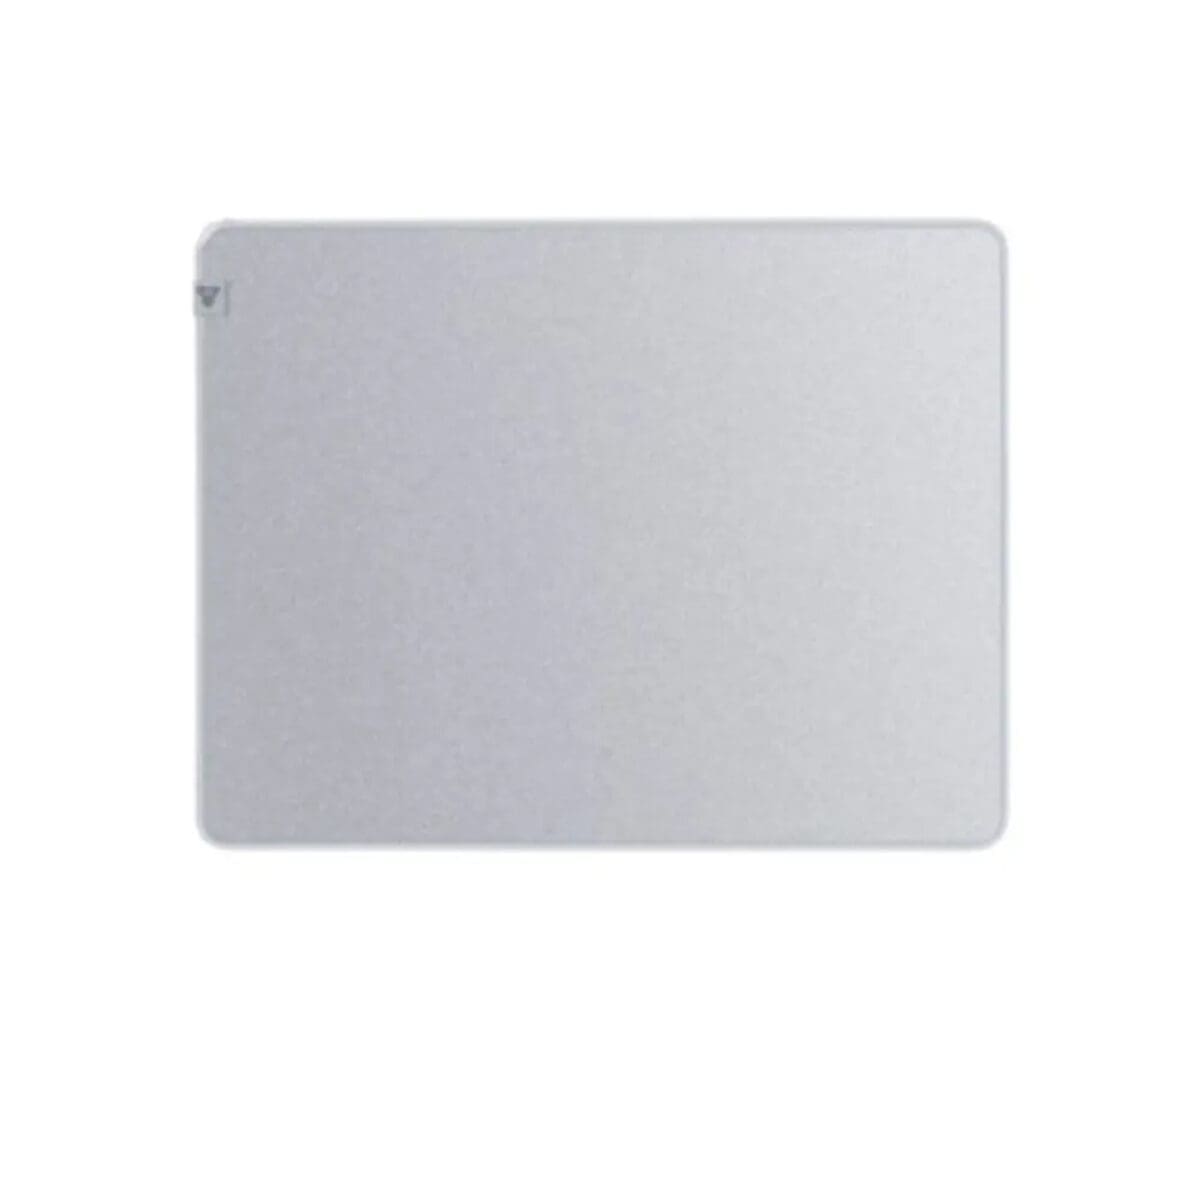 Fantech MP353 AGILE White (Medium) | Mousepad